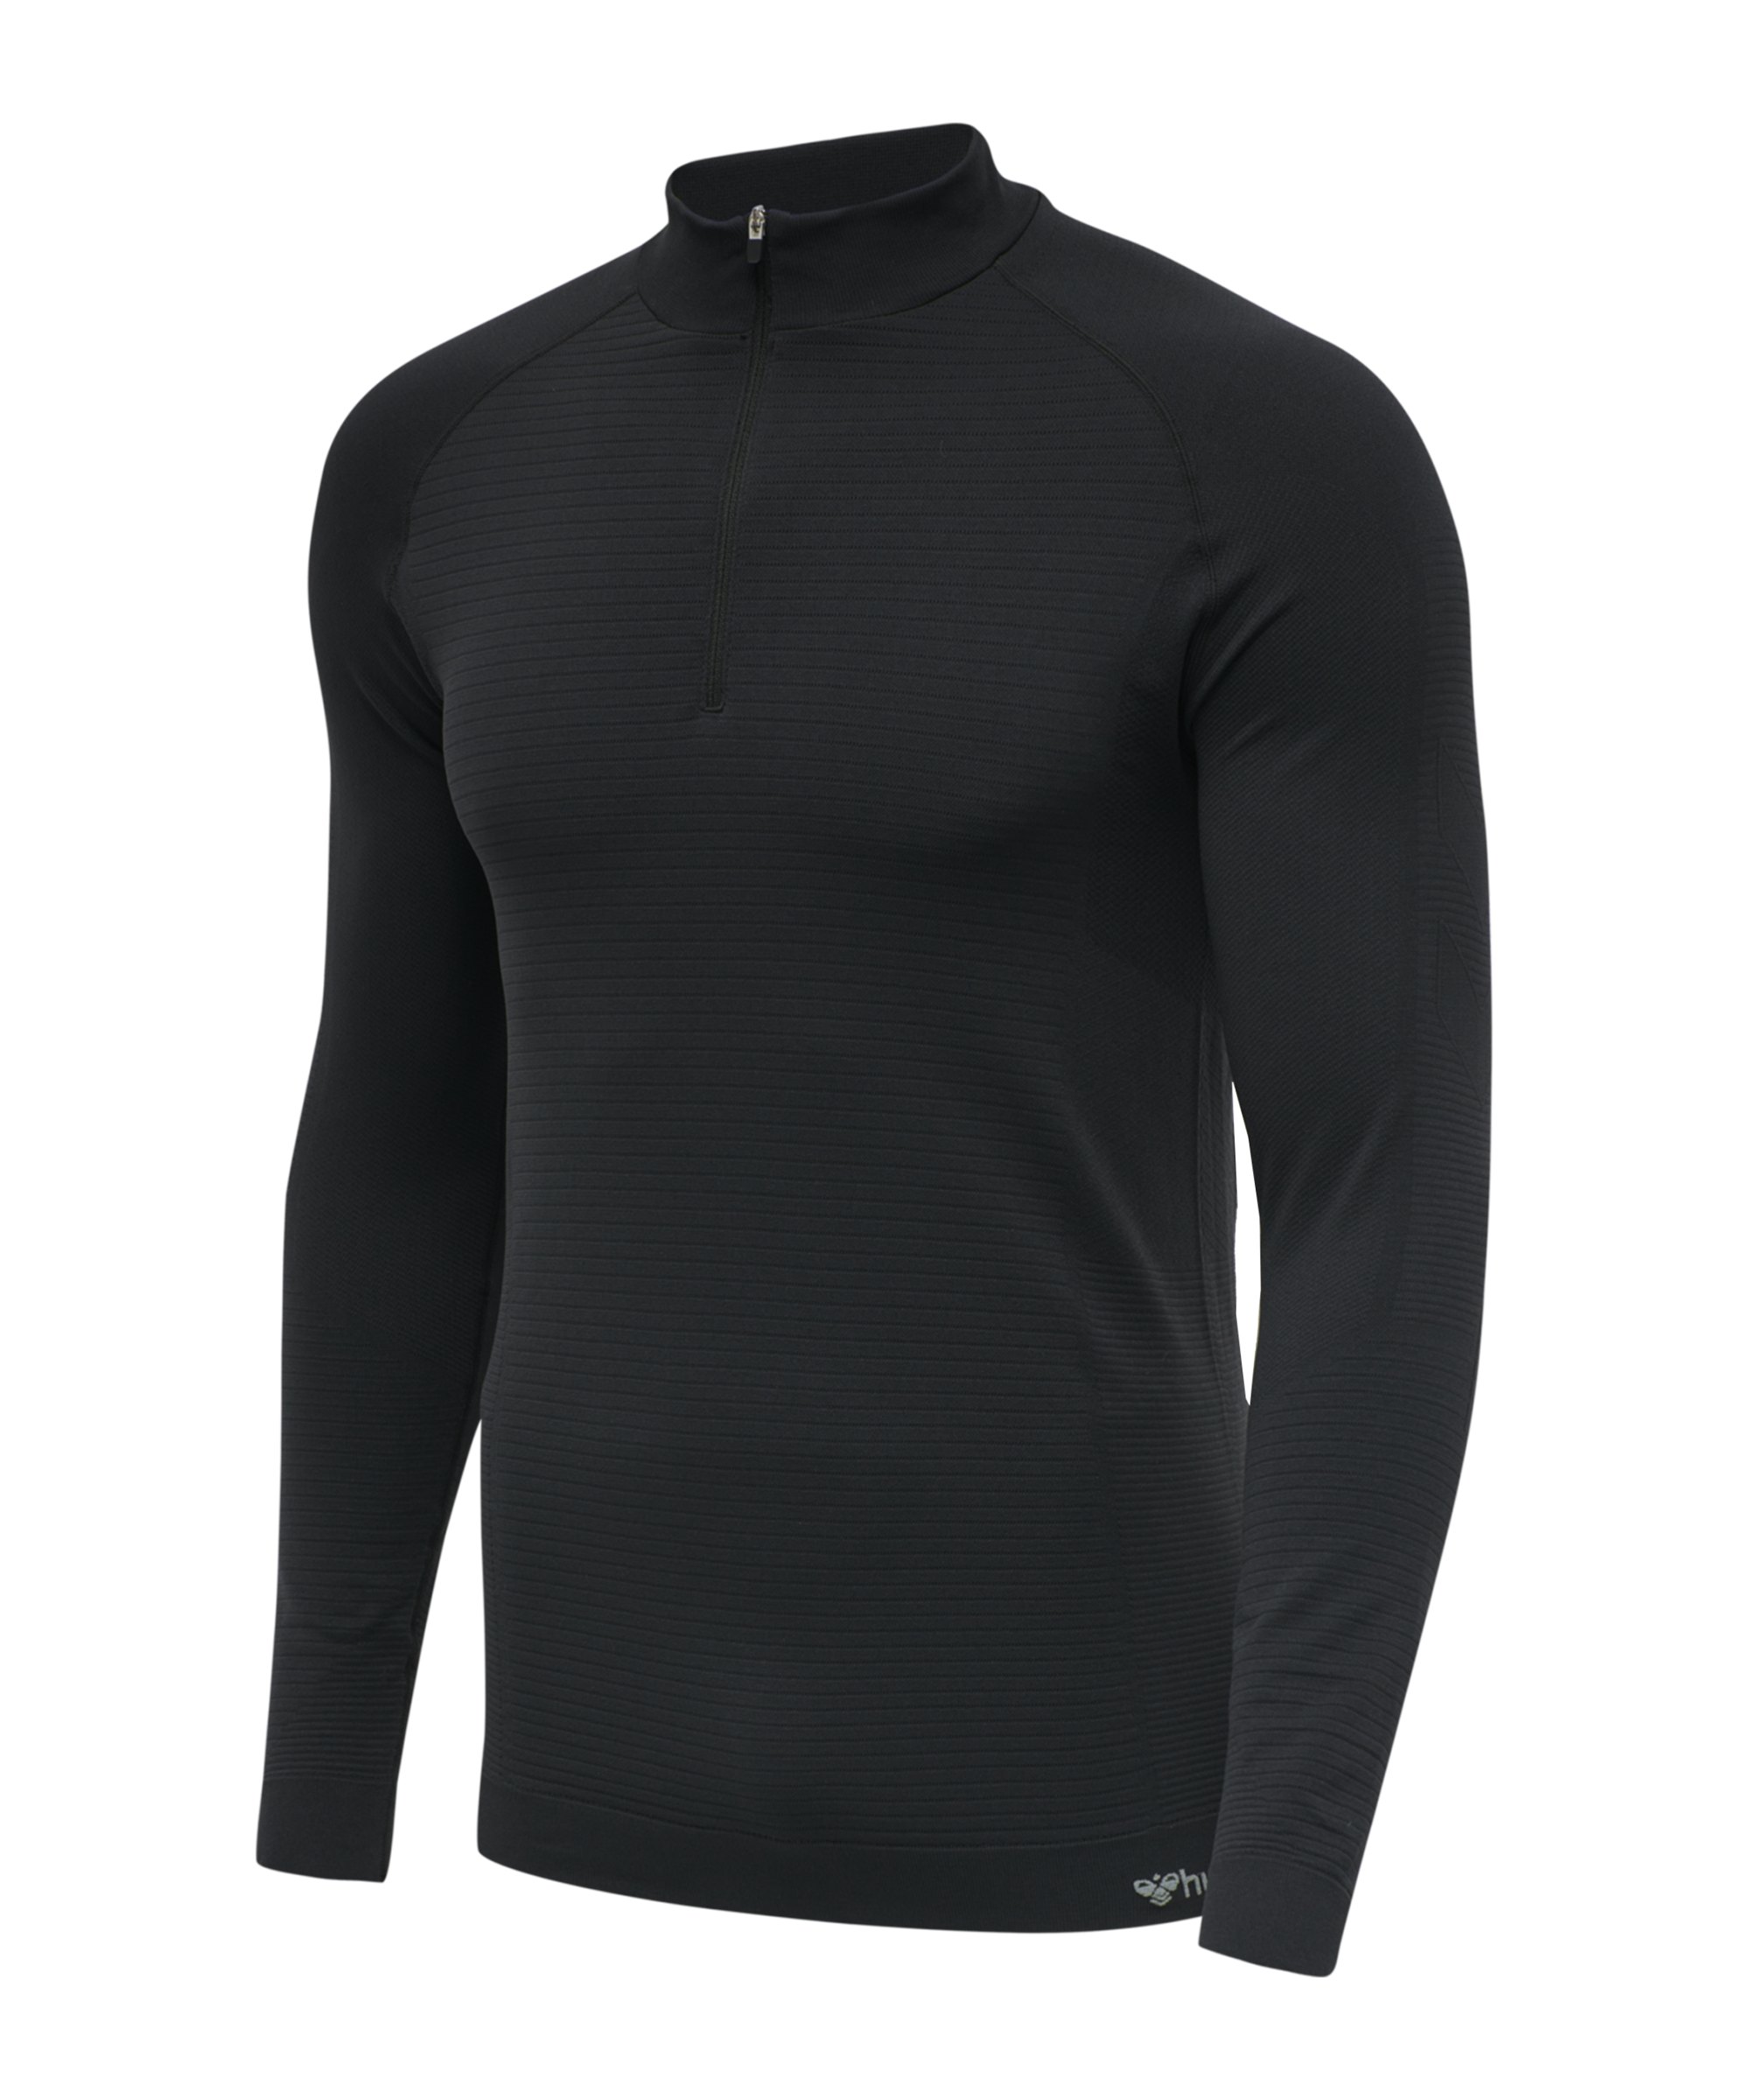 Hummel hmlstroke Seamless HalfZip Sweatshirt F2001 - schwarz